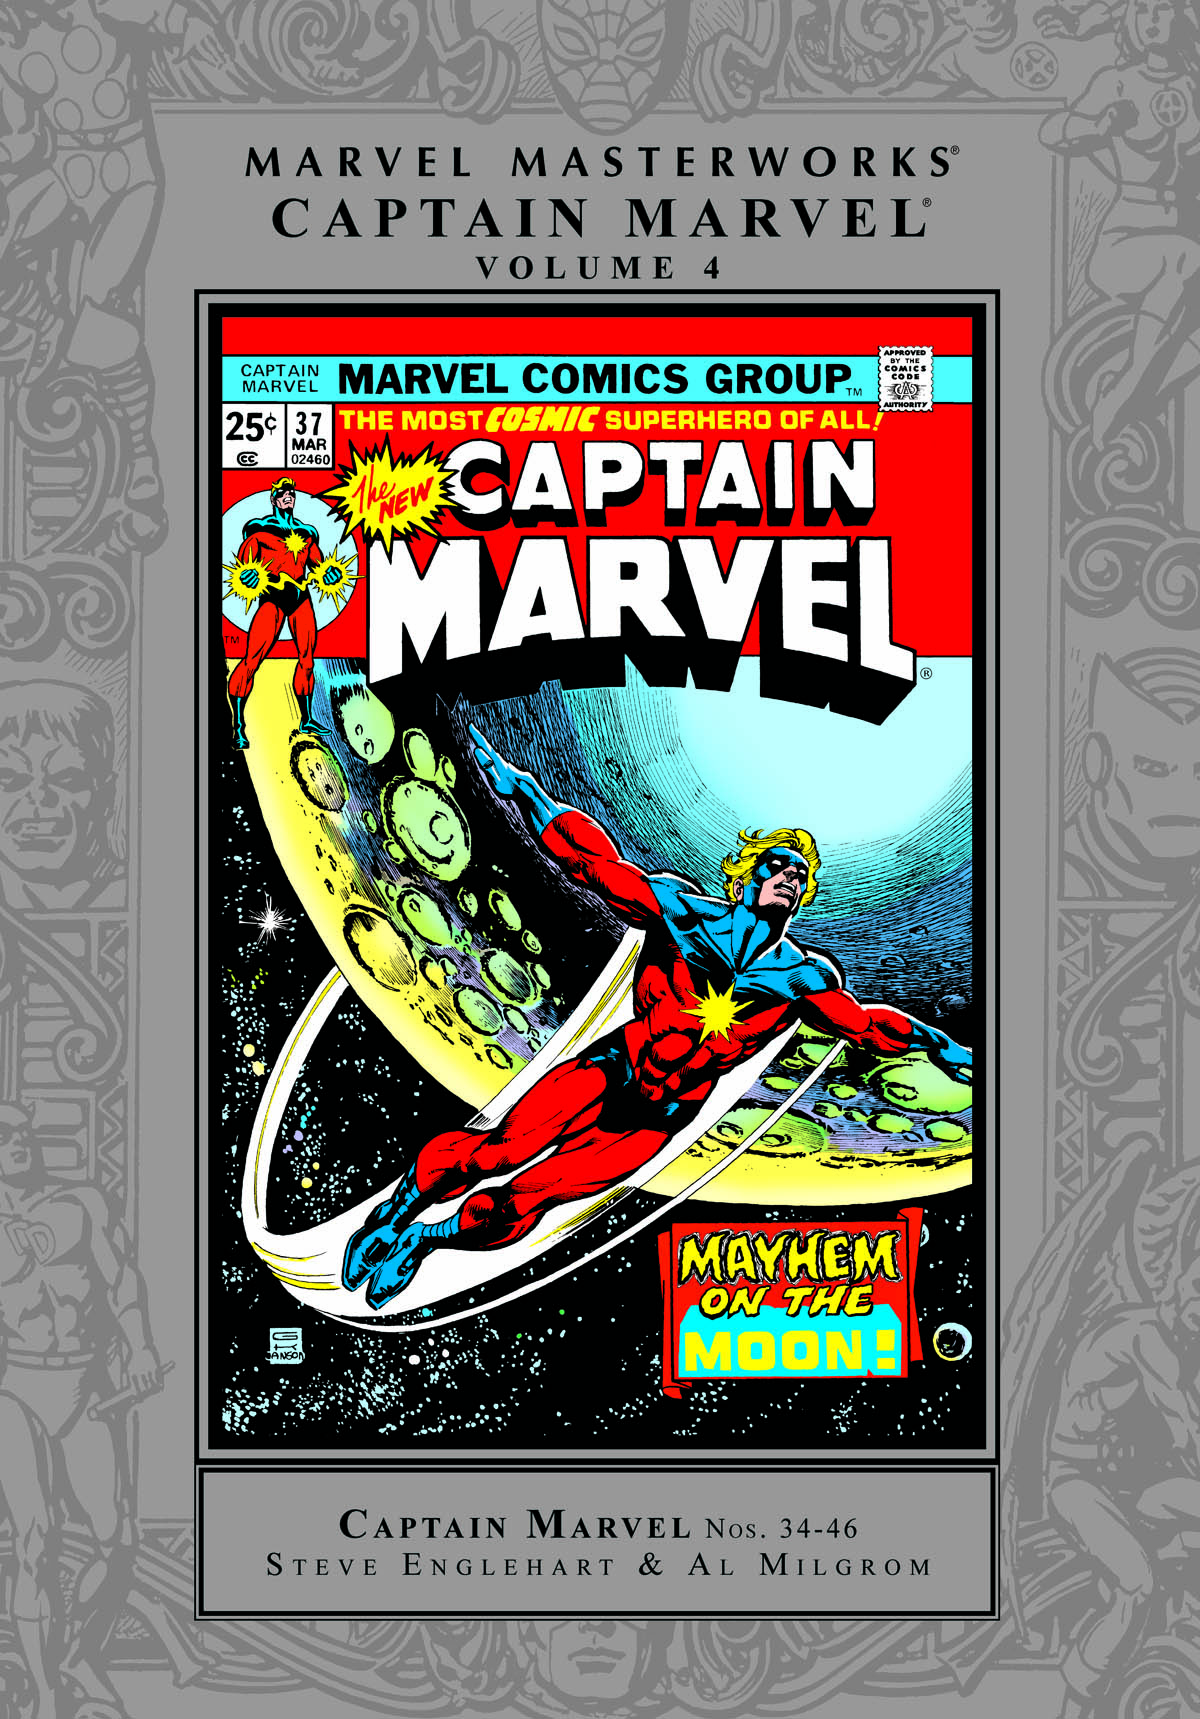 Marvel Masterworks: Captain Marvel   (Trade Paperback)